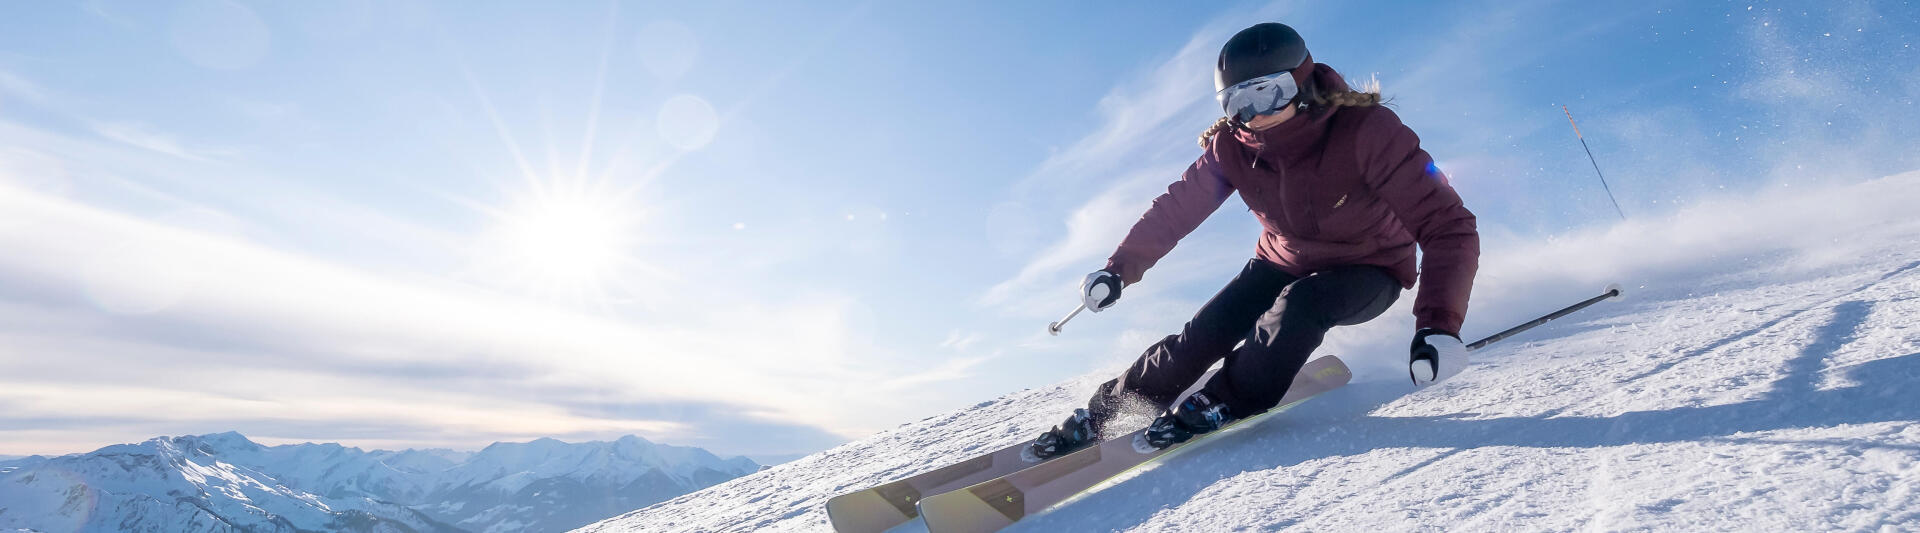 Cuidar corretamente do teu capacete de ski